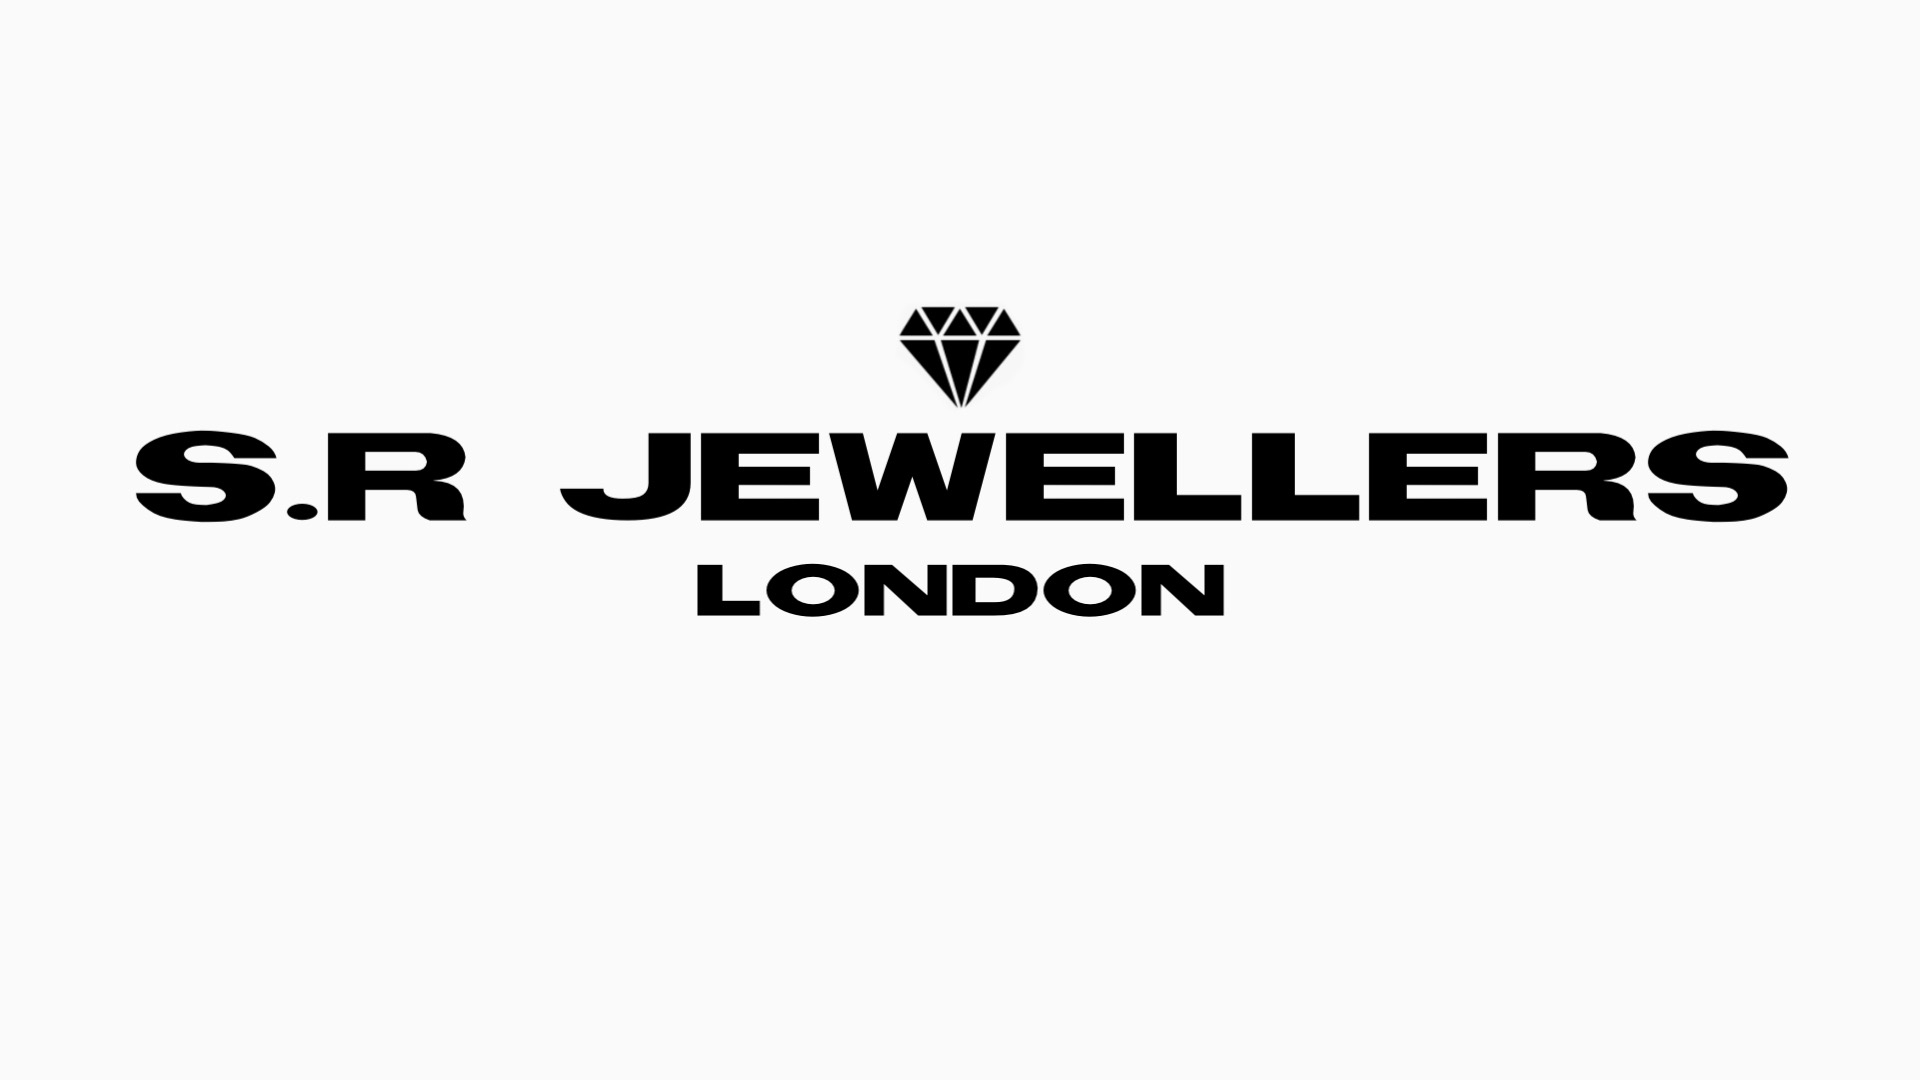 S.R Jewellers London